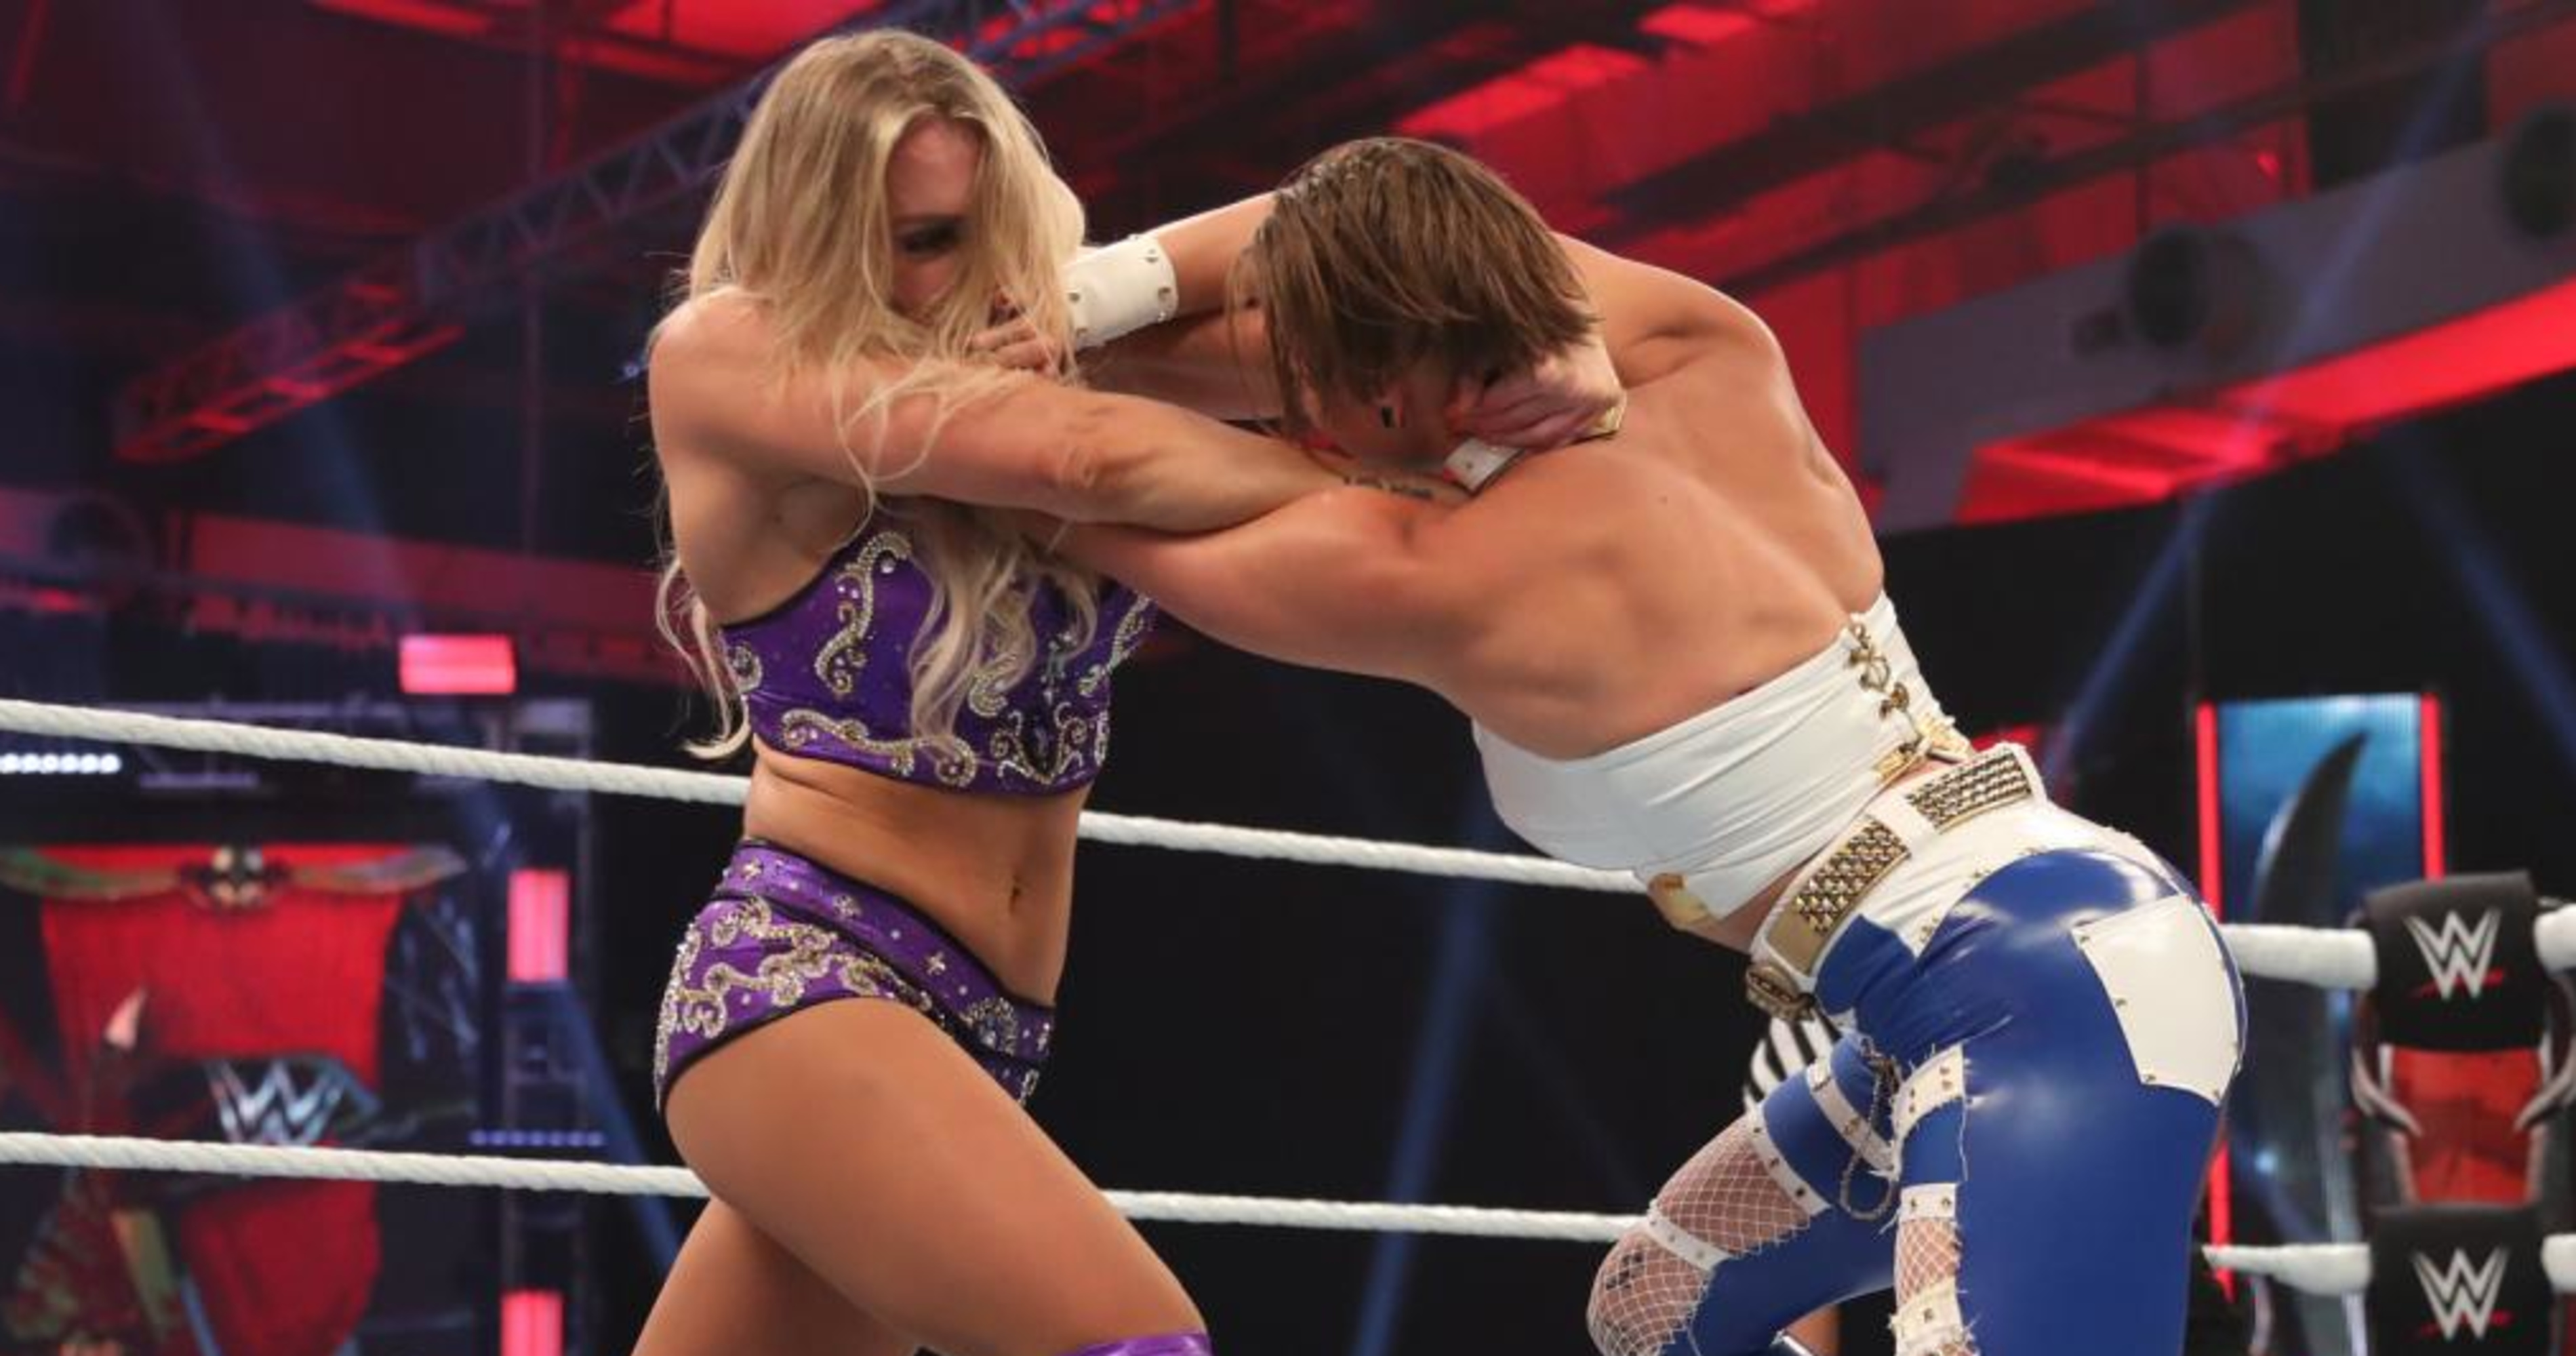 Rhea Ripley vs. Charlotte Flair Set for WWE Raw Women's Title Match at